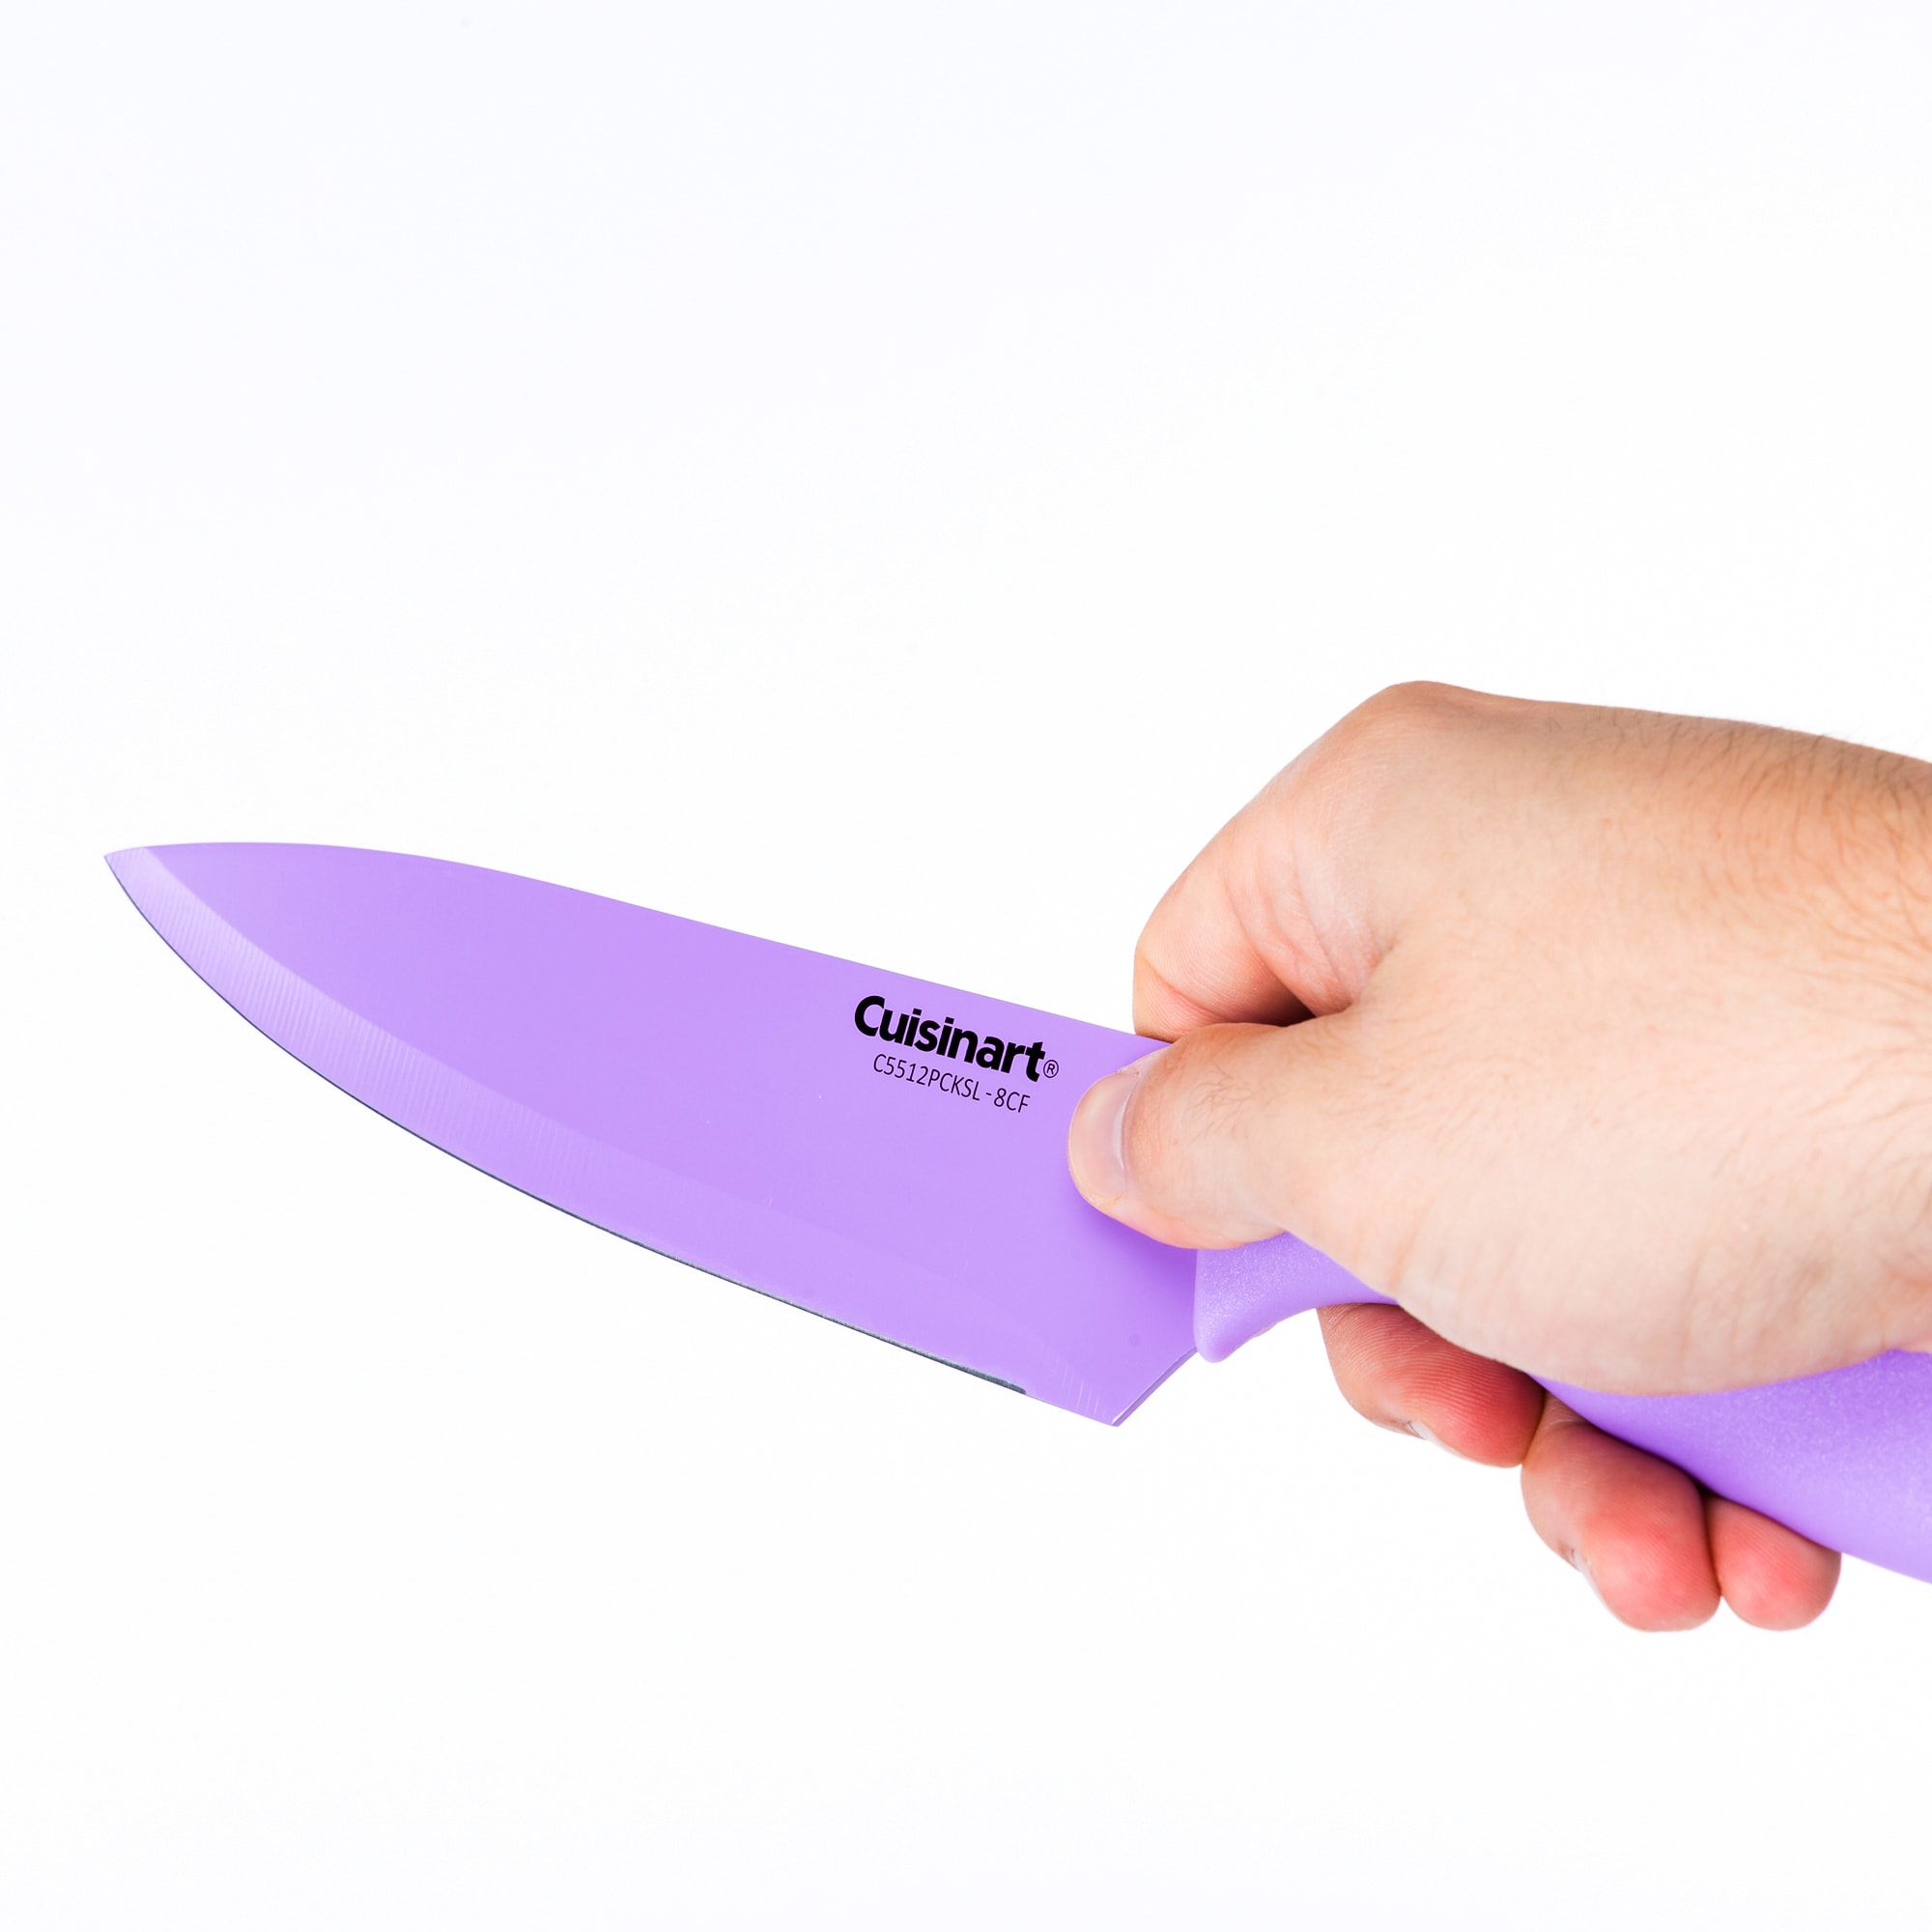 Cuisinart Advantage 12pc Non-stick Coated Color Knife Set With Blade Guards  - C55-12pr1 : Target